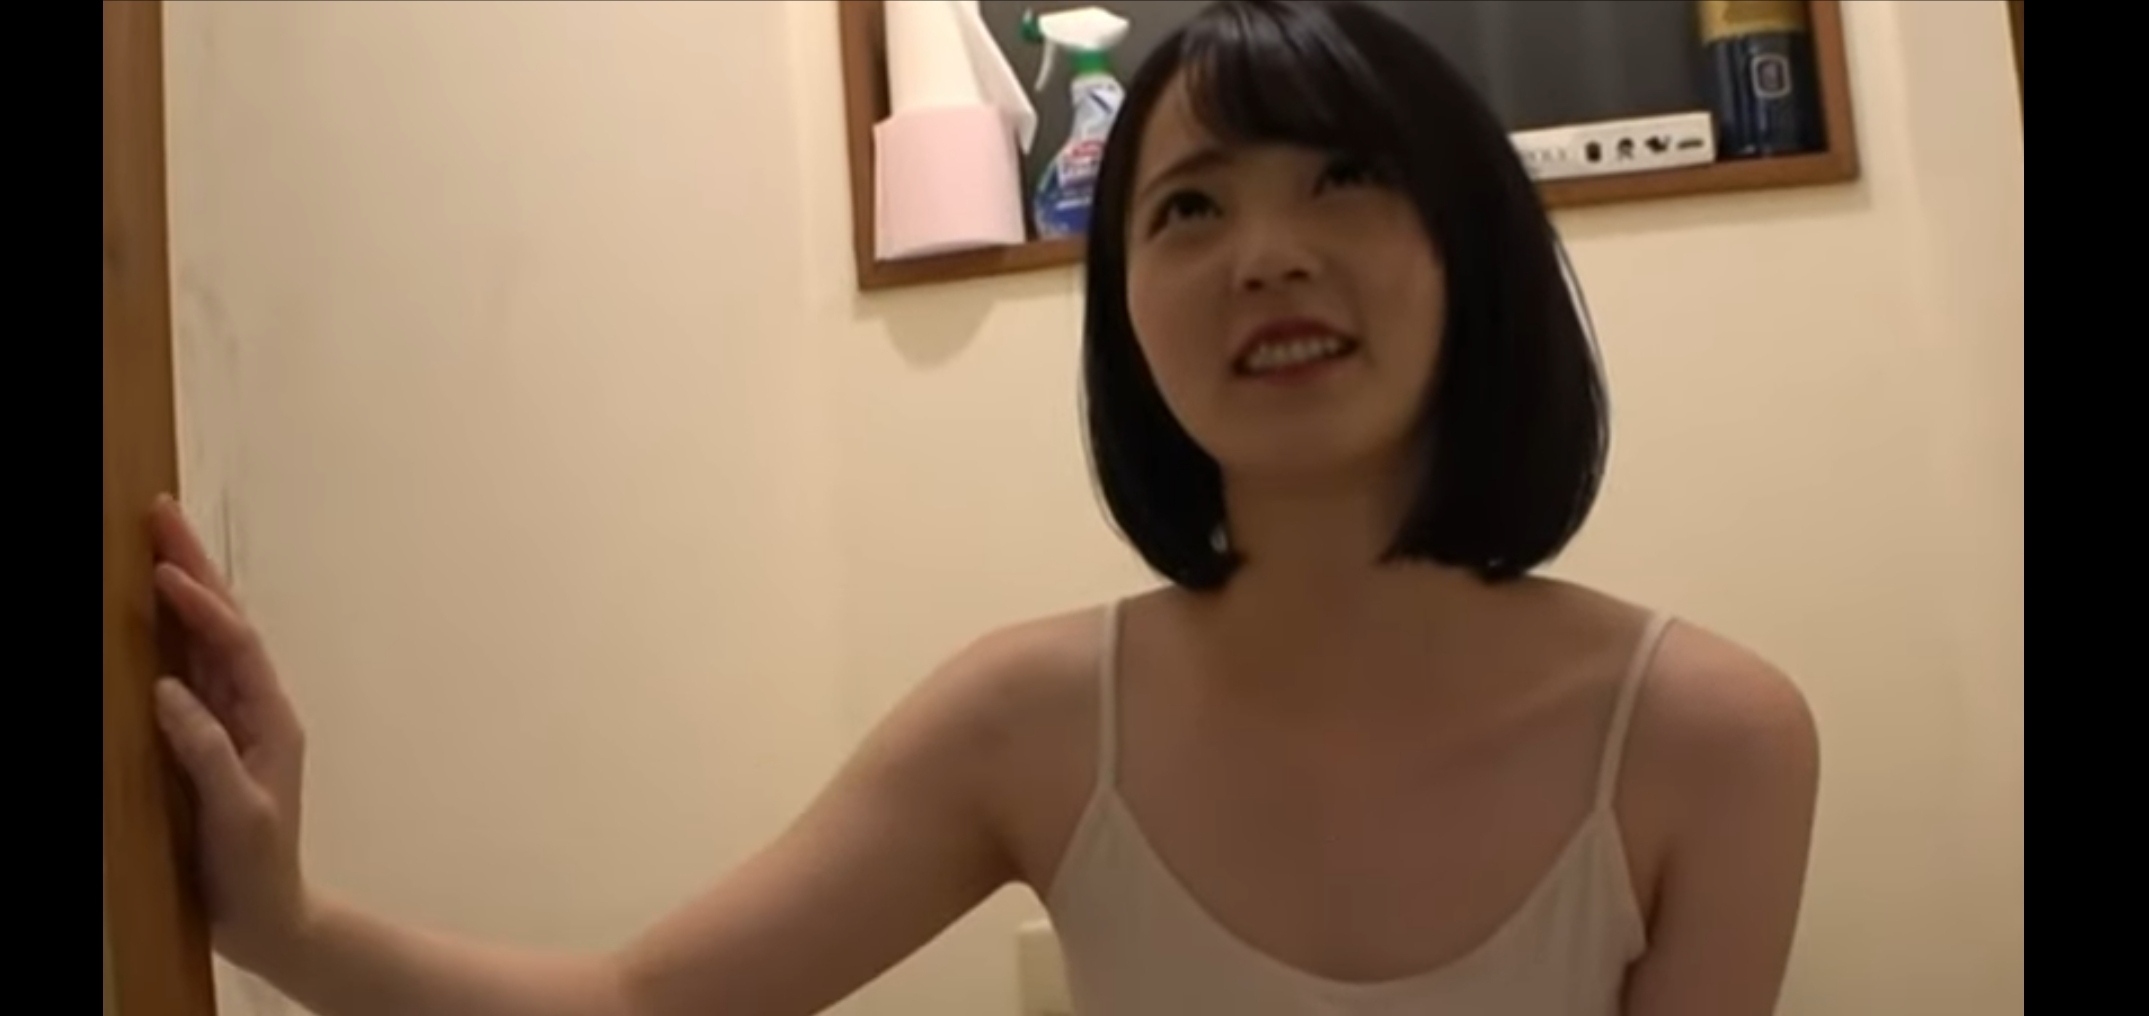 japenese girl toilet interview